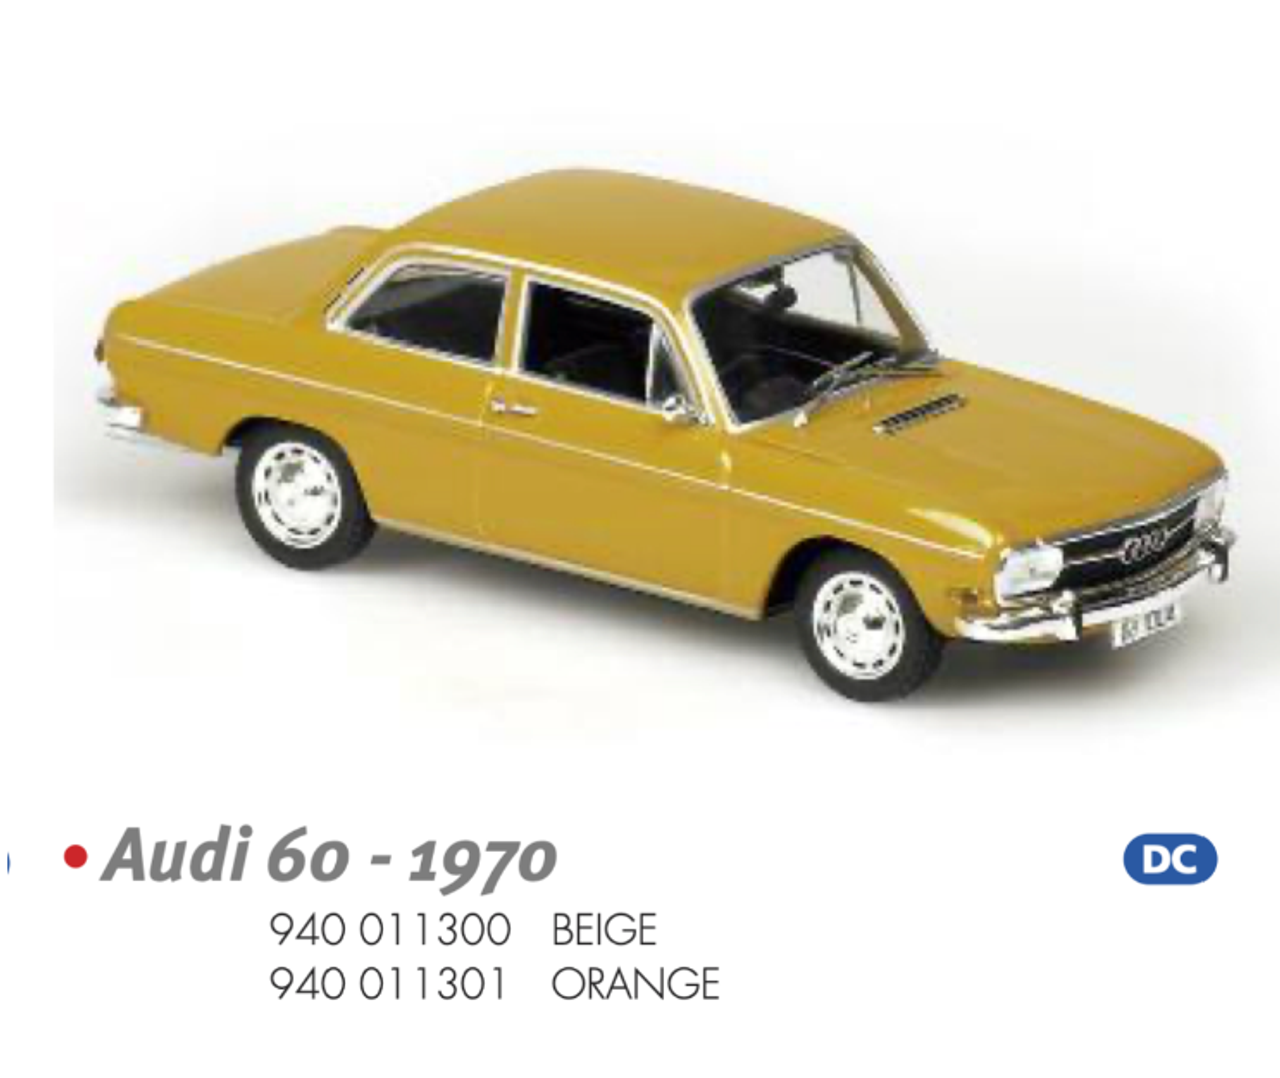 1/43 Minichamps AUDI 60 -1970 - ORANGE Diecast Car Model